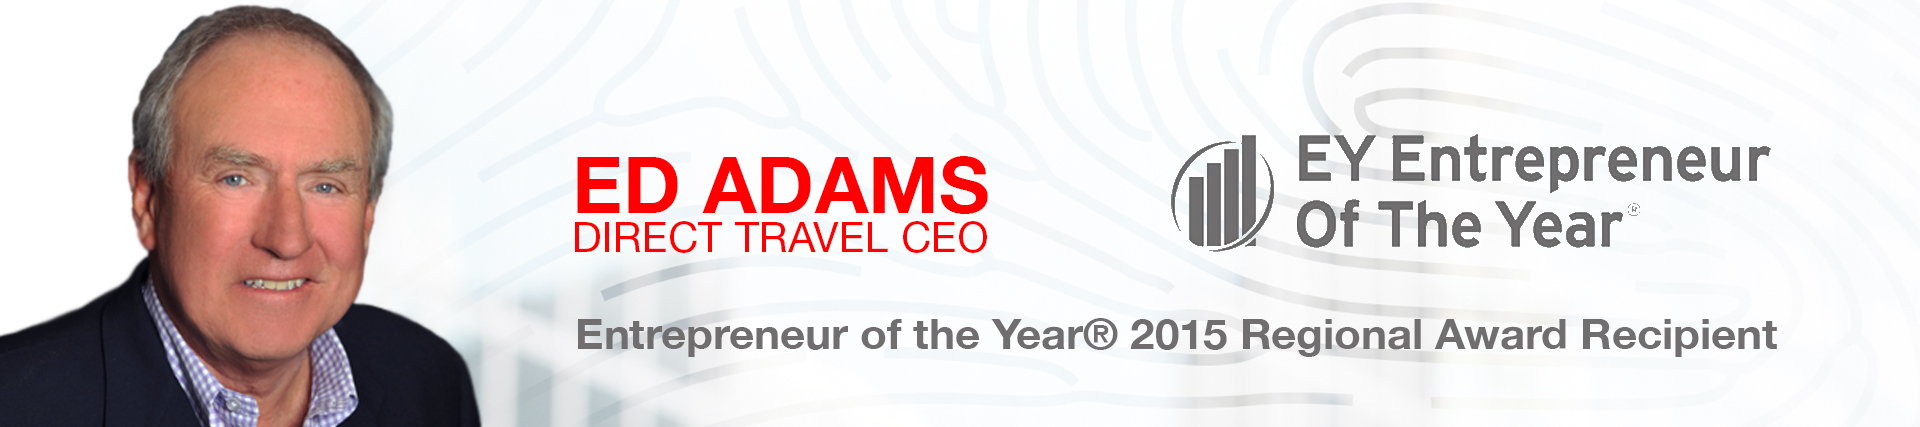 Ed Adams, Entrepreneur of The Year 2015 Regional Award Recipient